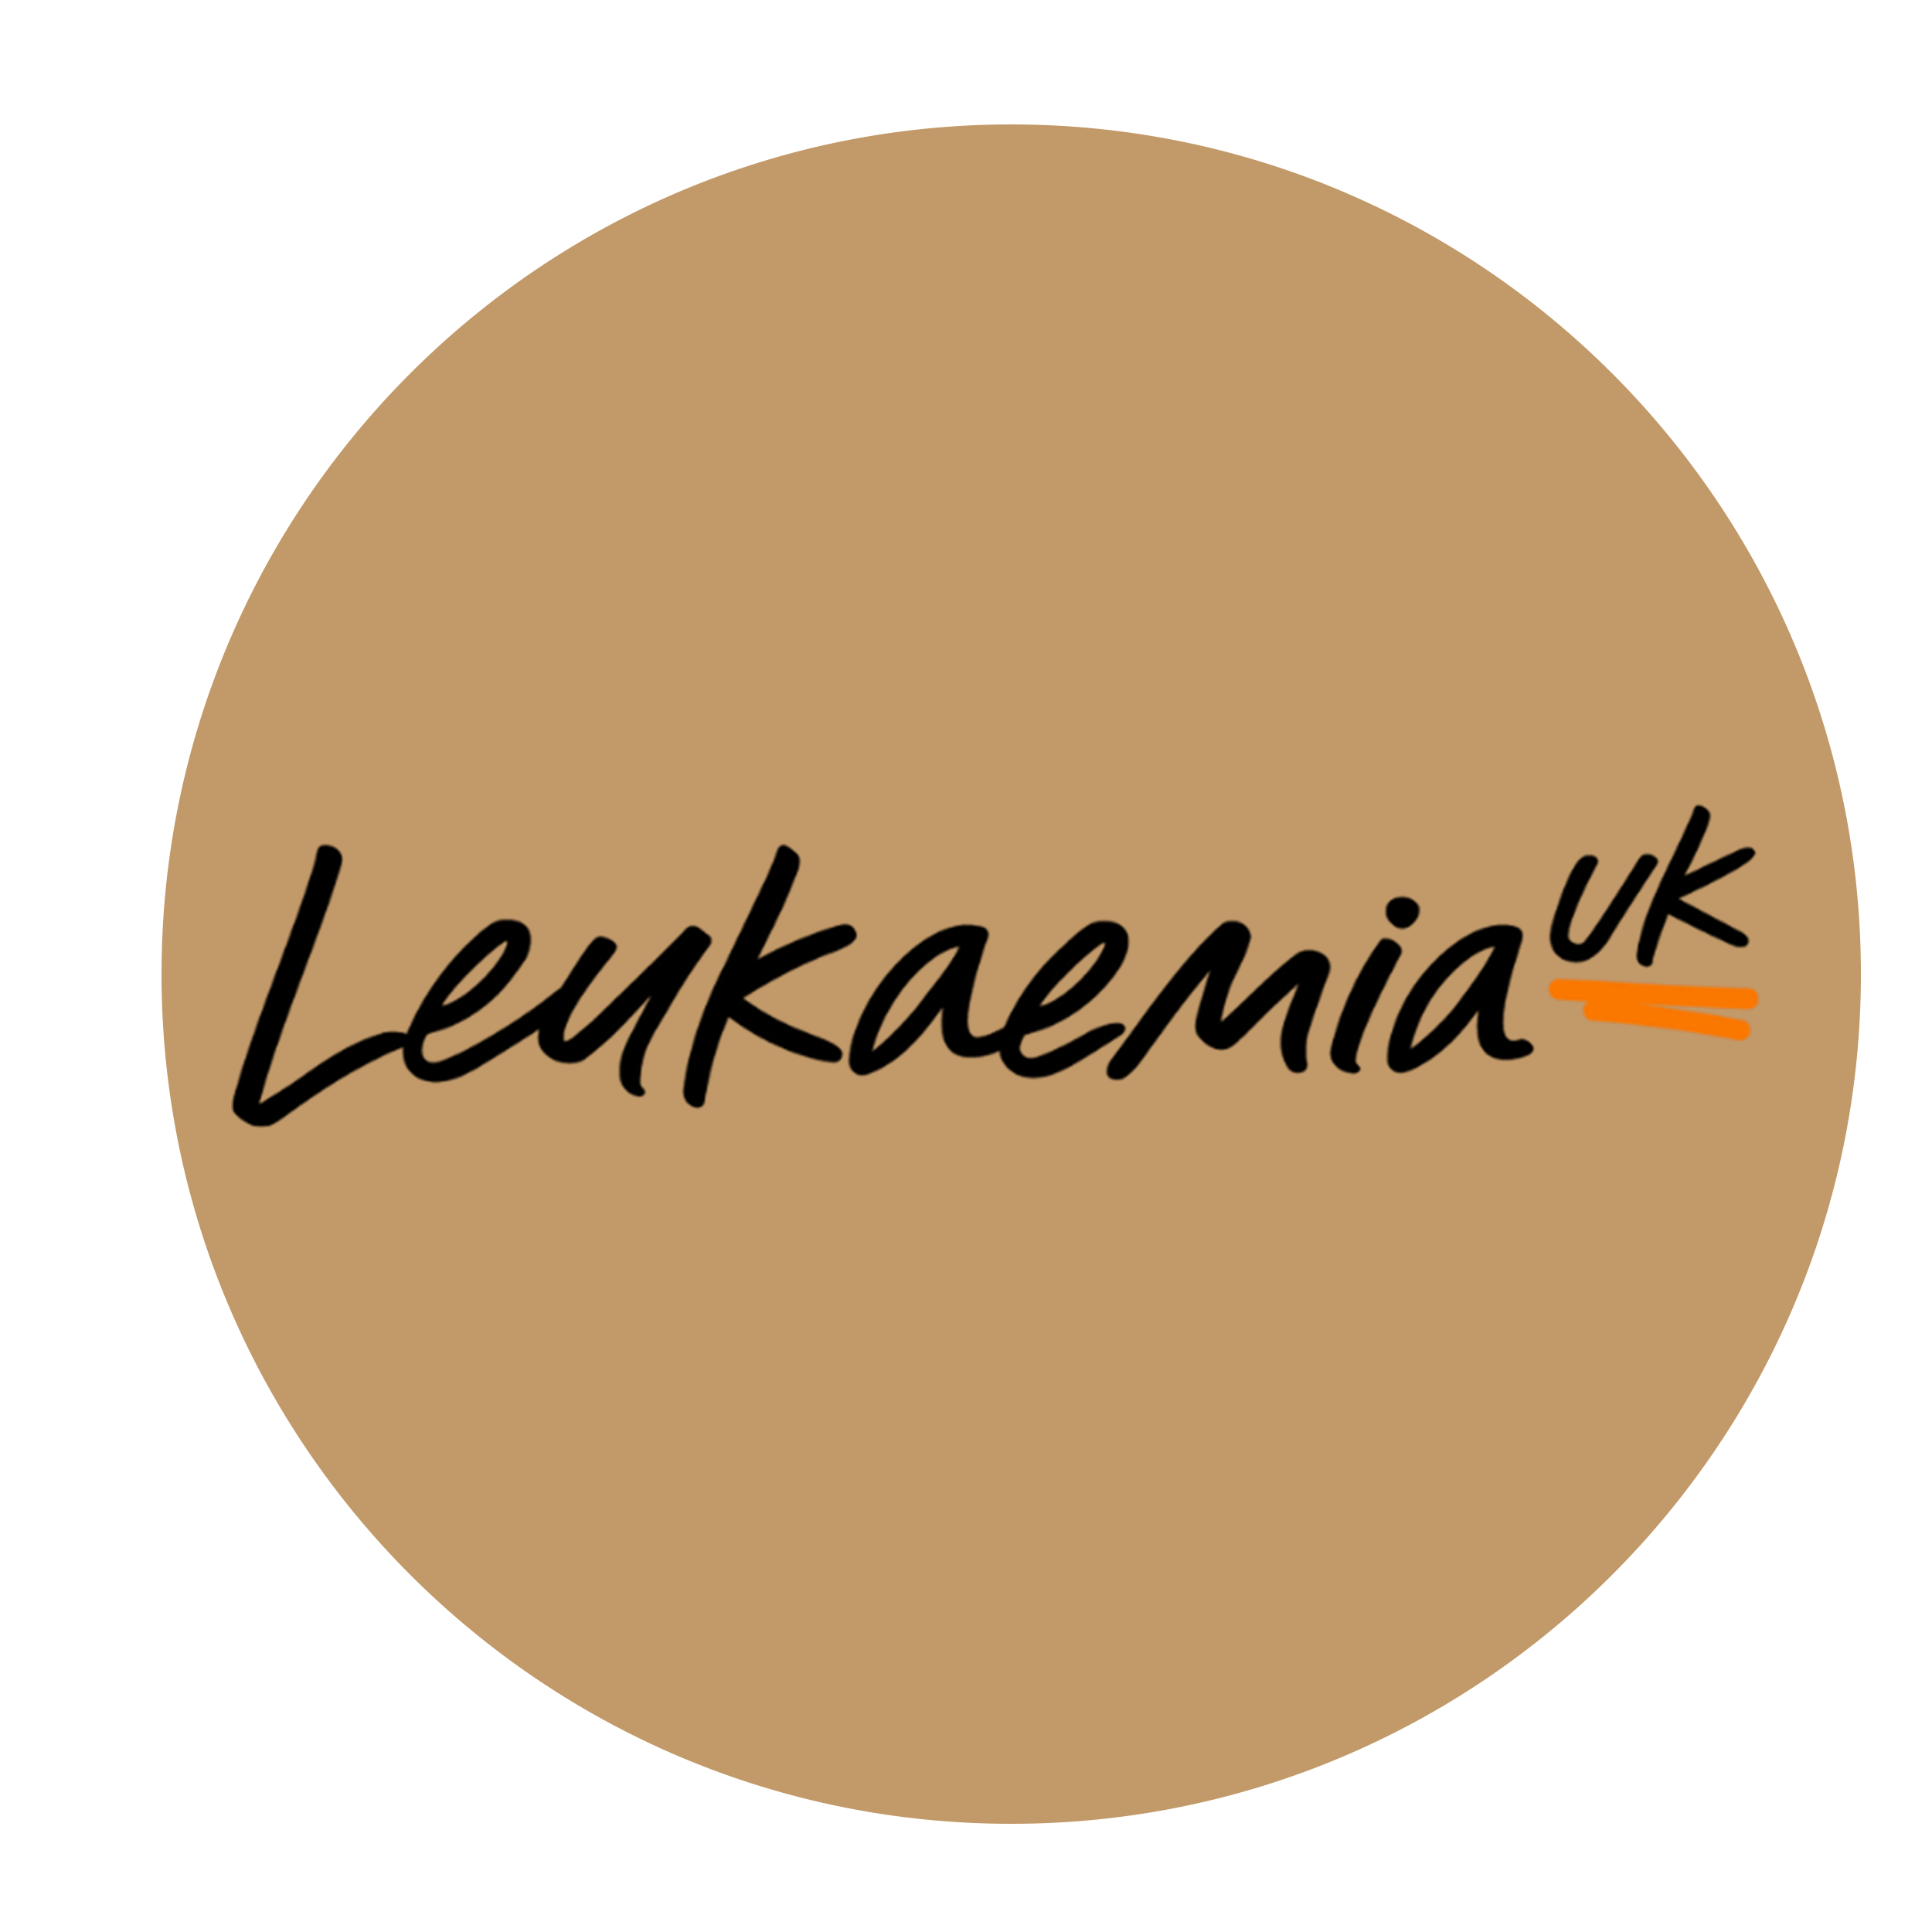 Supporting Leukaemia UK | Freedom People